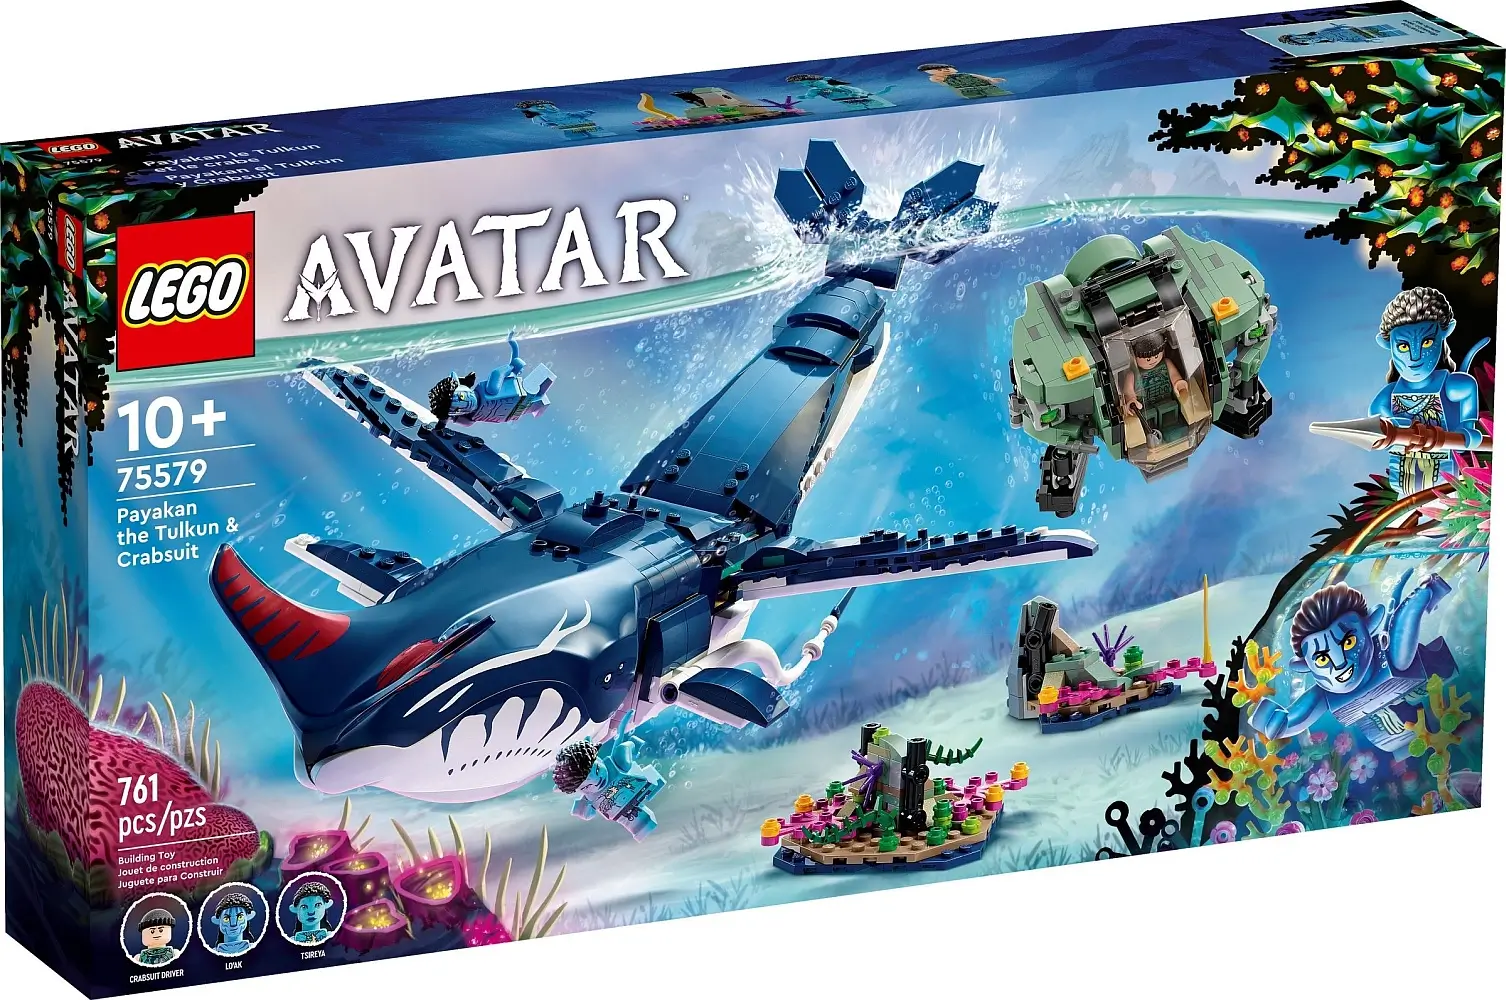 Pudełko zestawu 75579 z serii LEGO® Avatar™ – Payakan the Tulkun i mech-krab